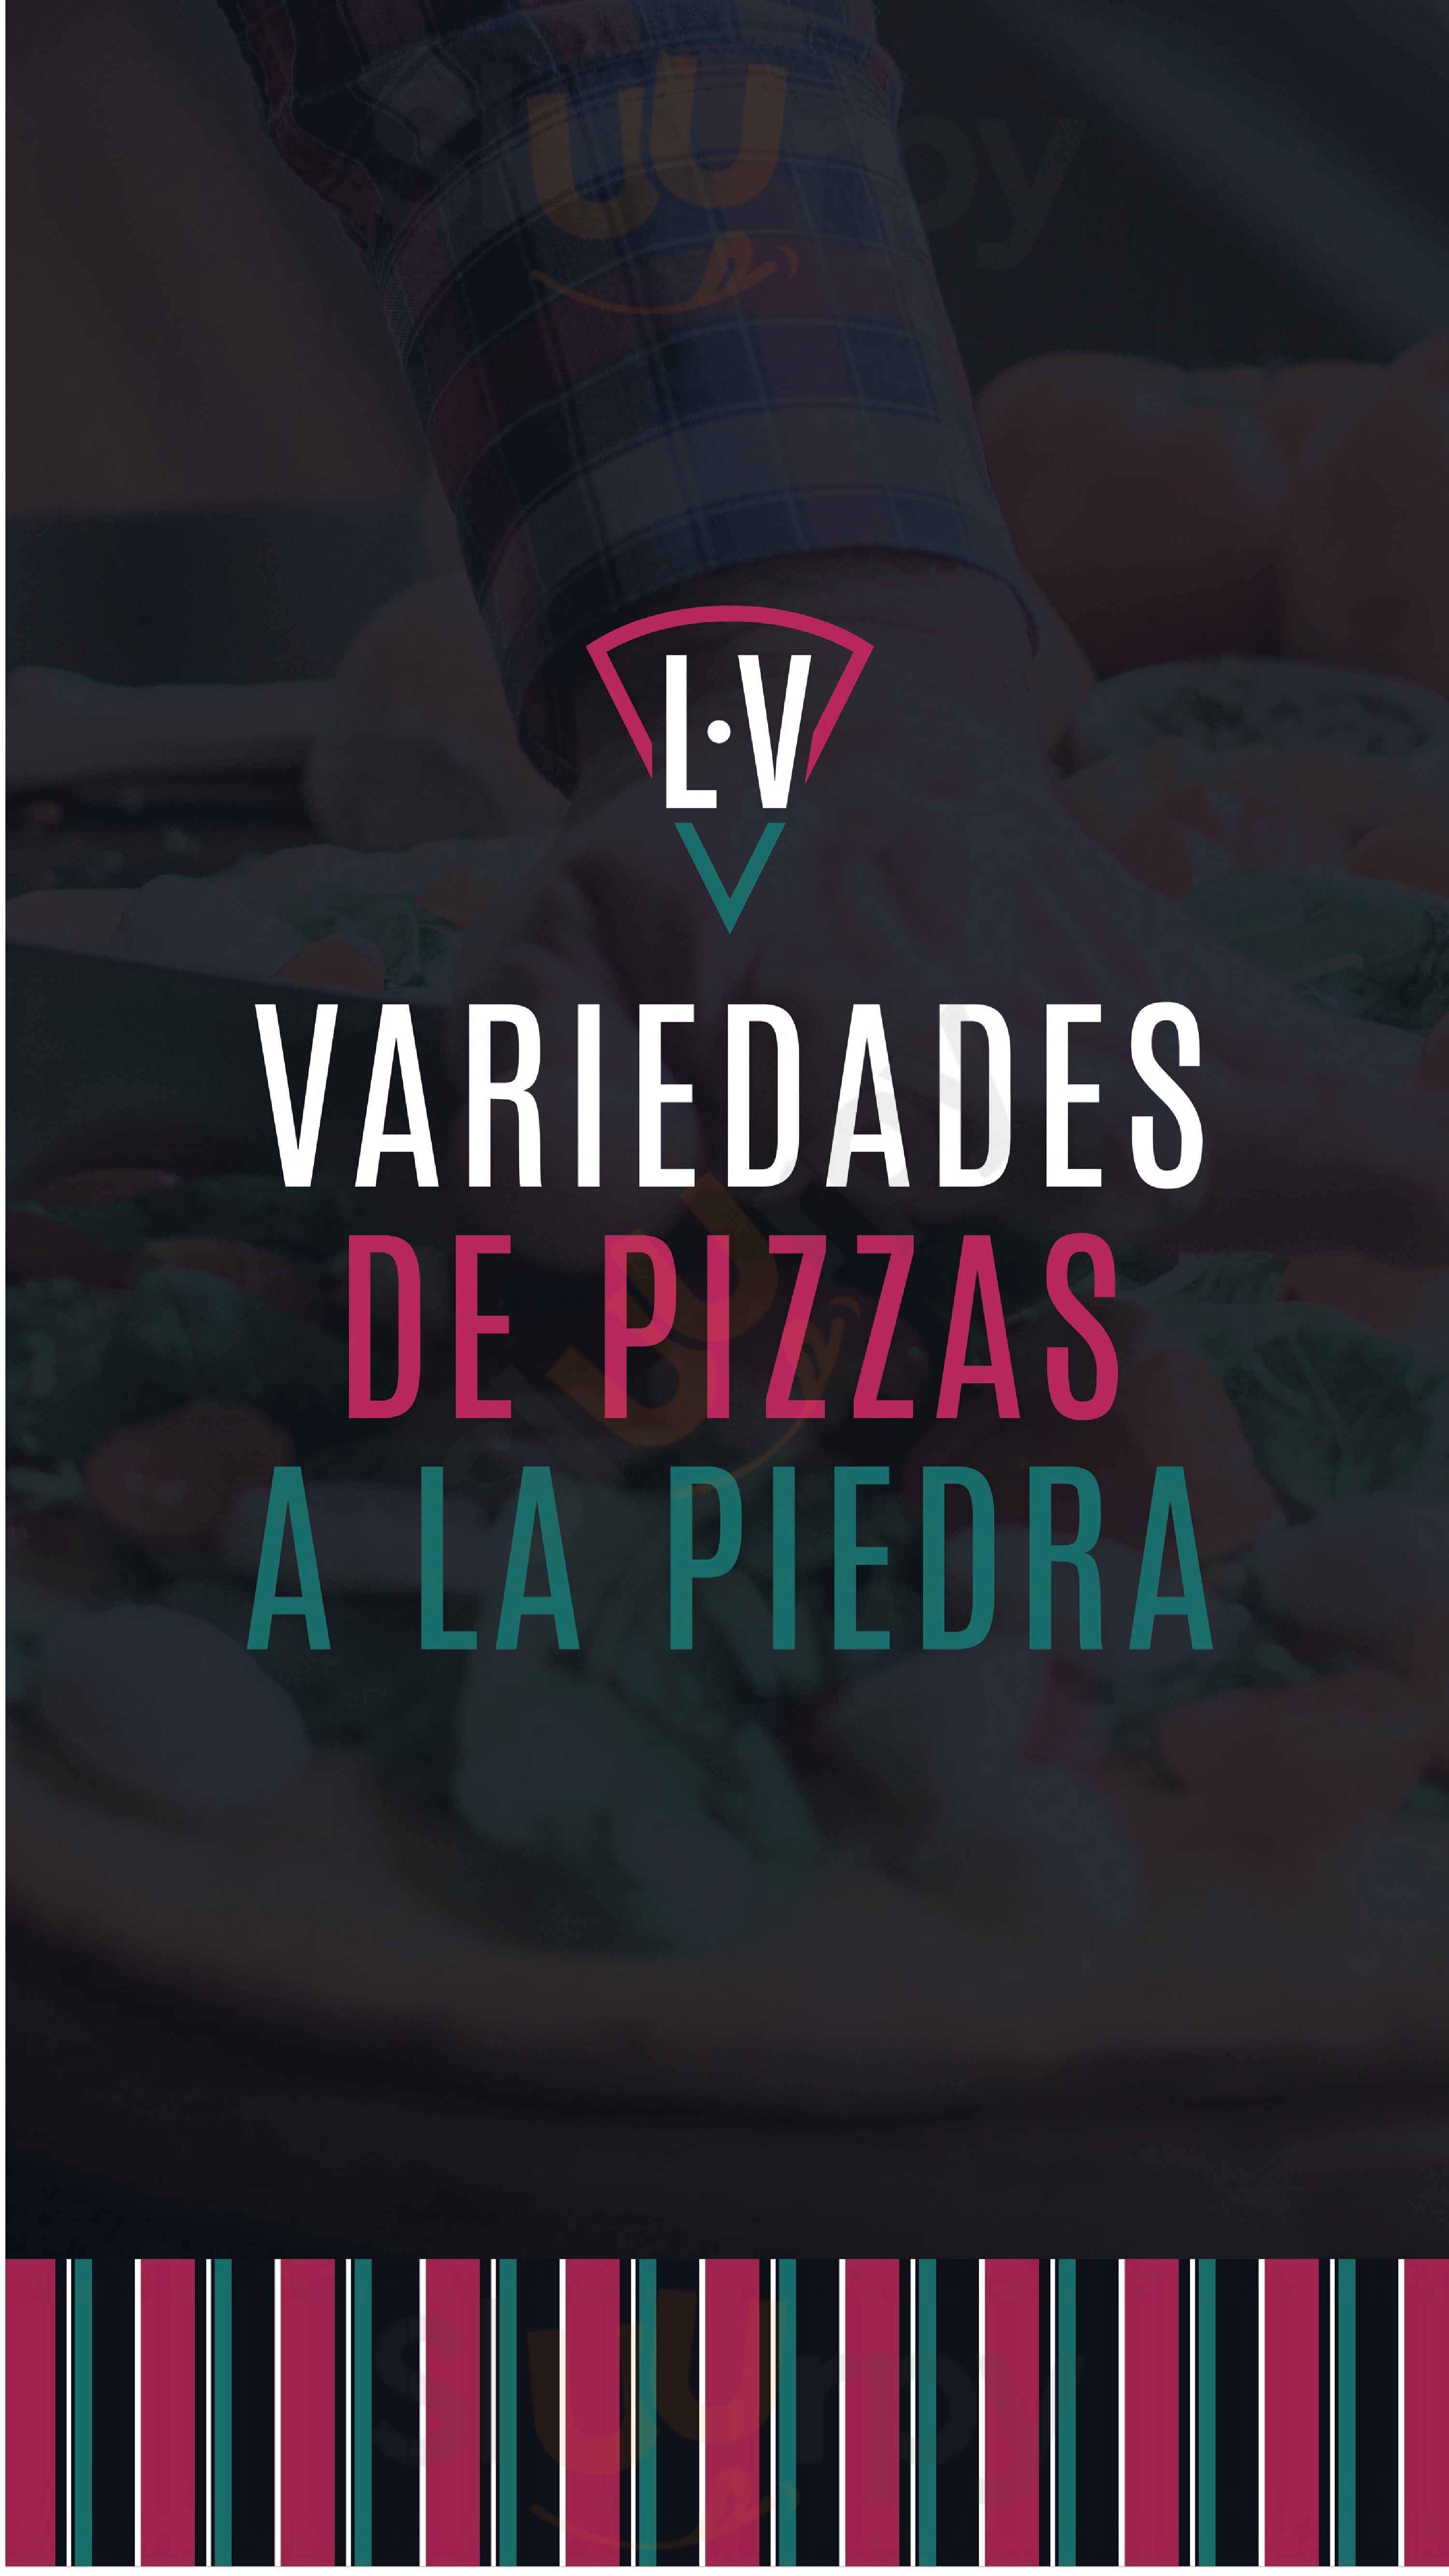 La. Vicca -tienda De Pizza Buenos Aires Menu - 1